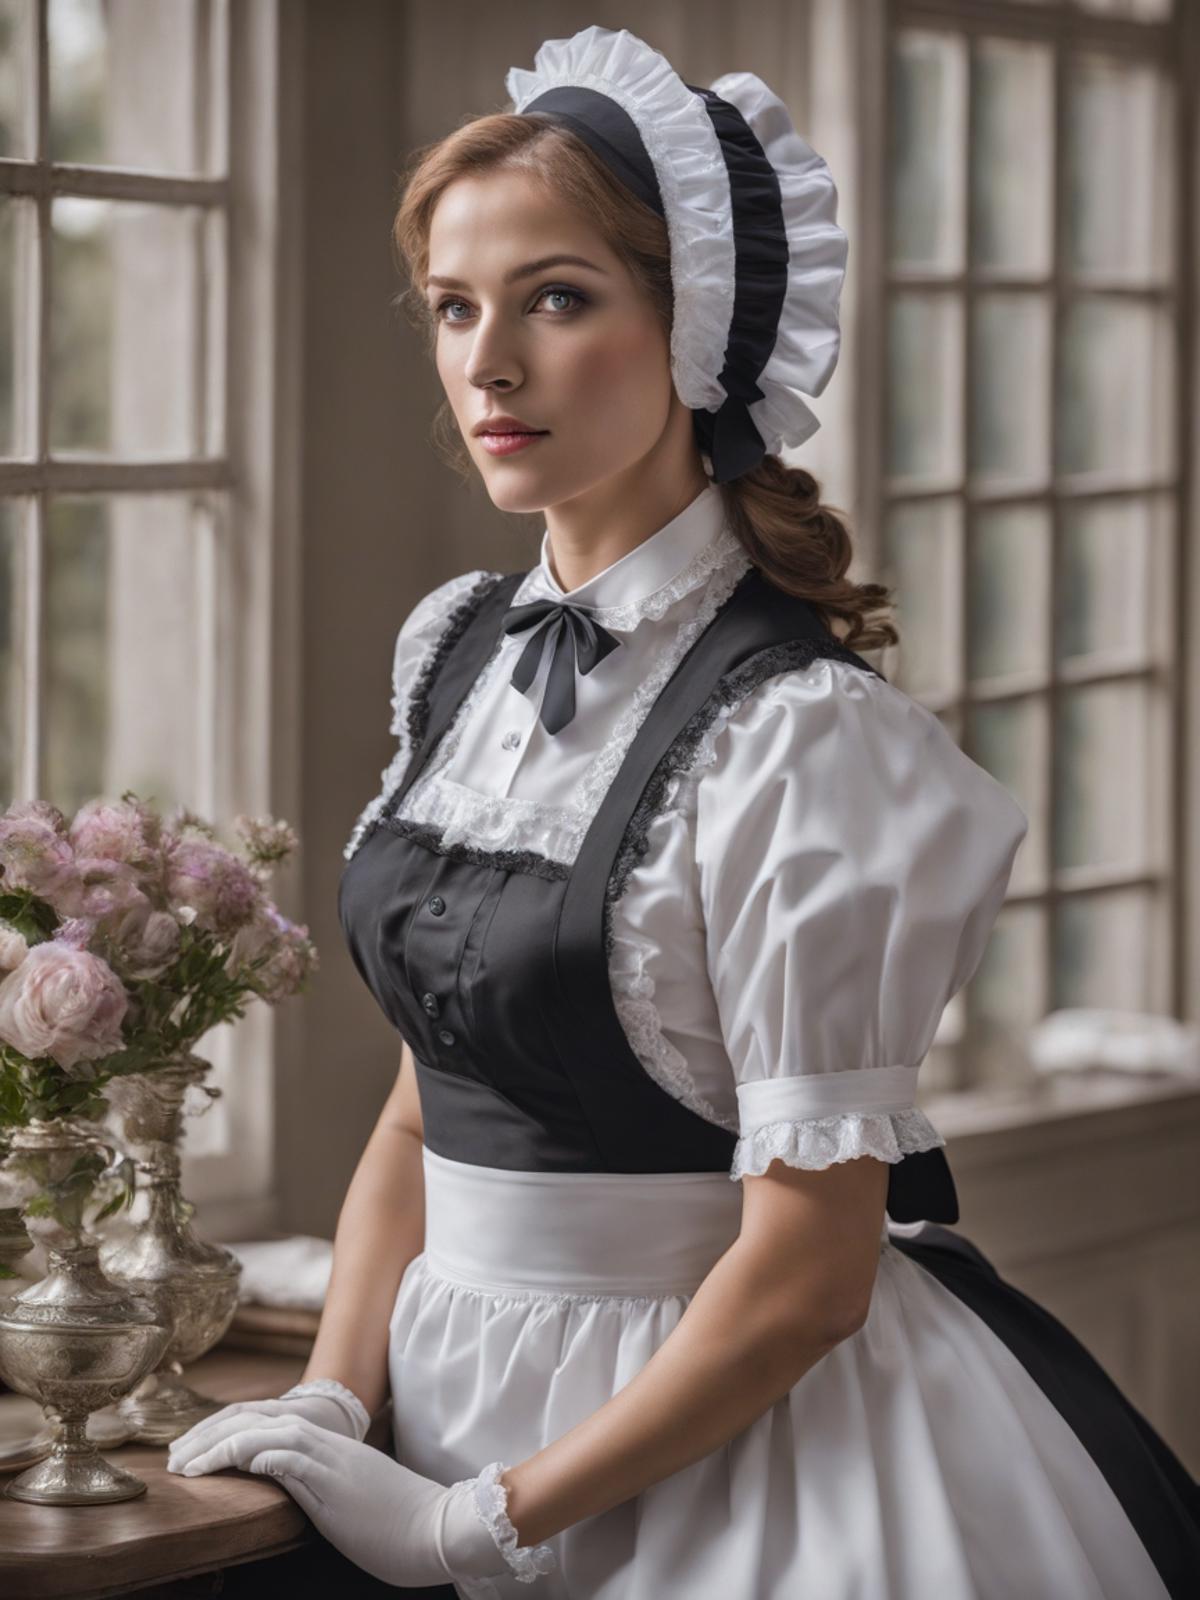 XL Victorian Maid Dress image by n15g